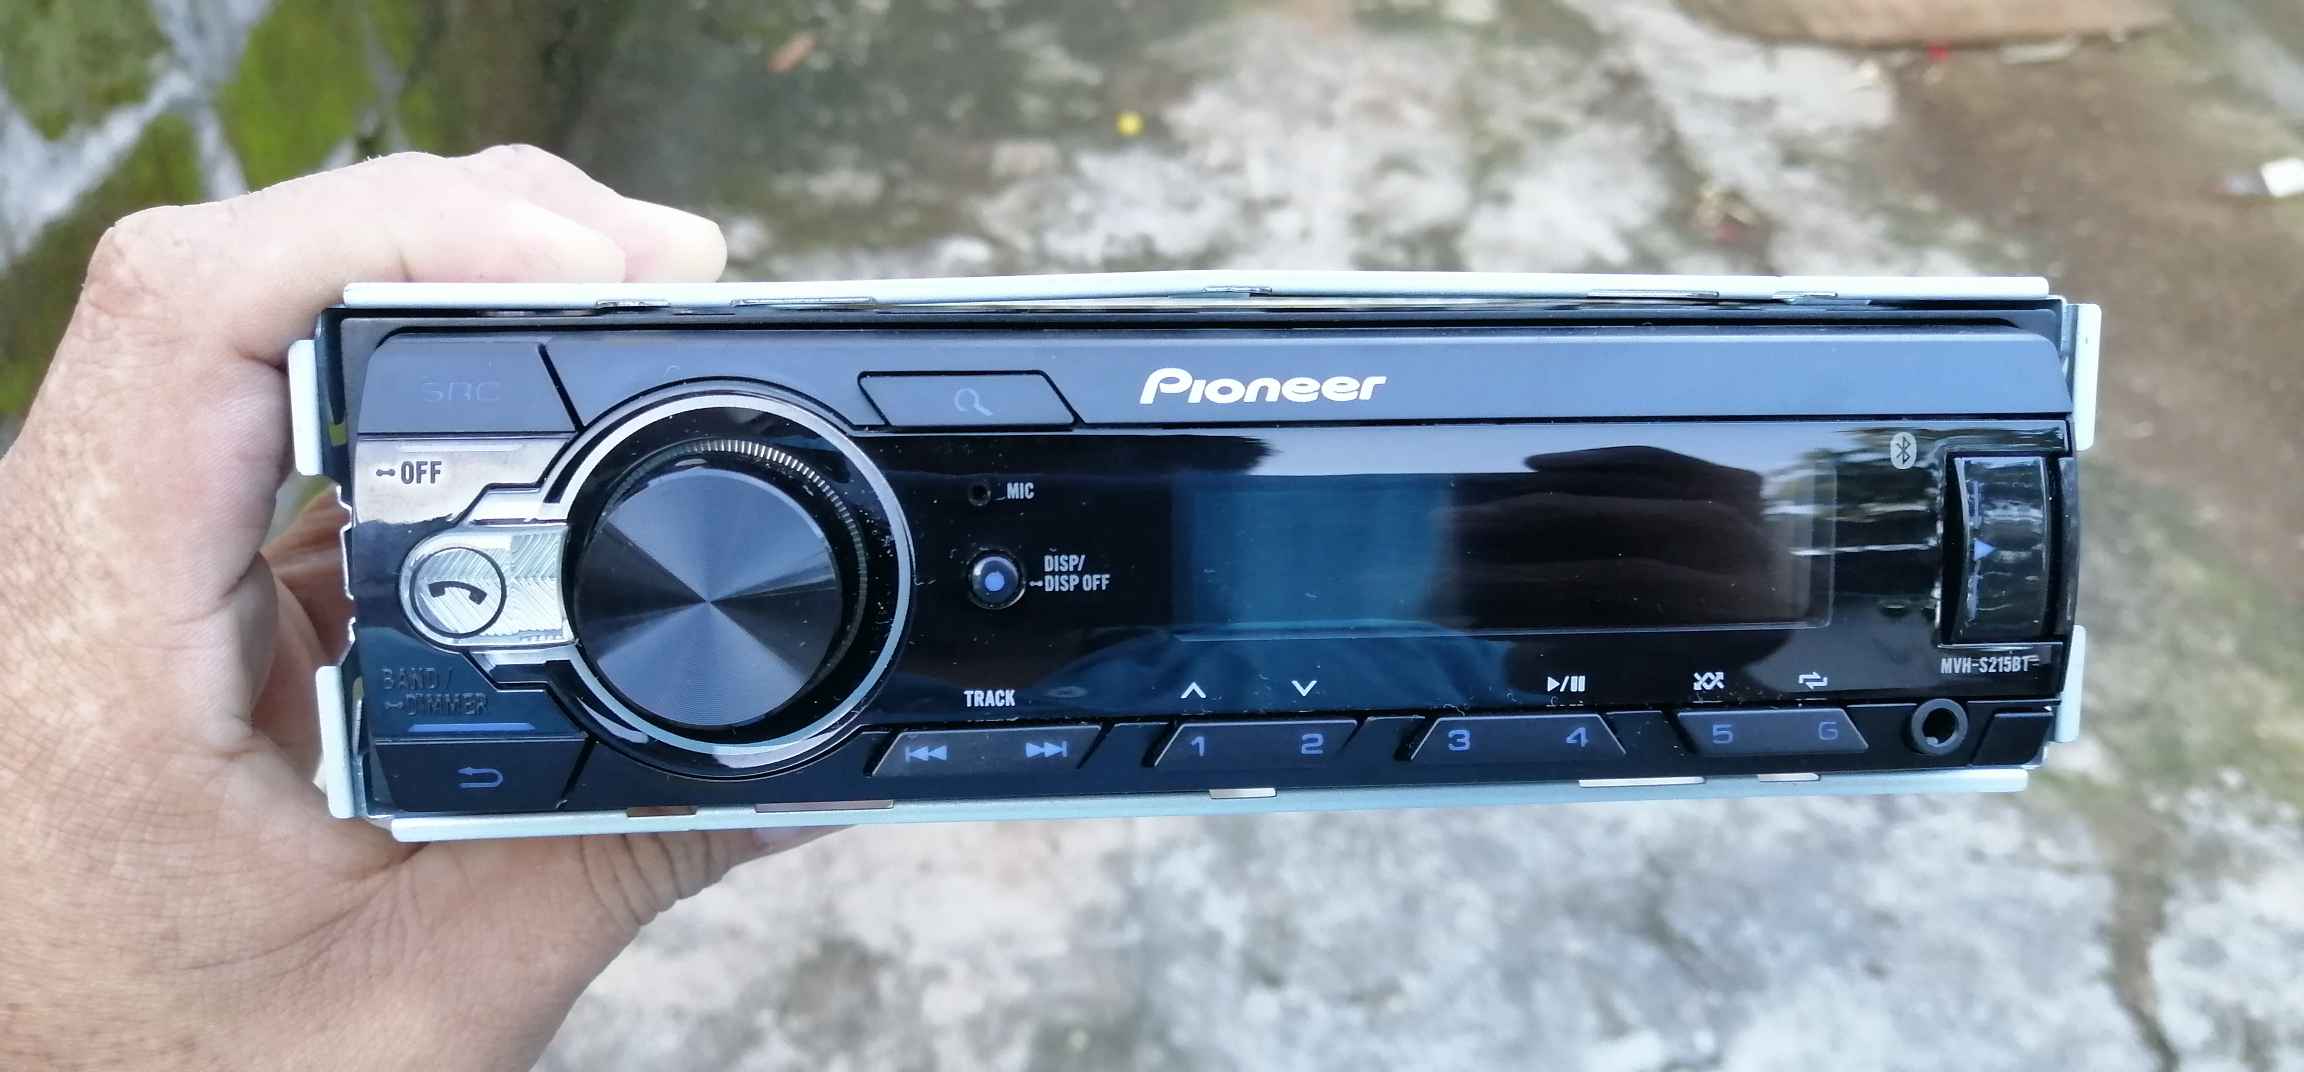 Vendo radio pioneer original